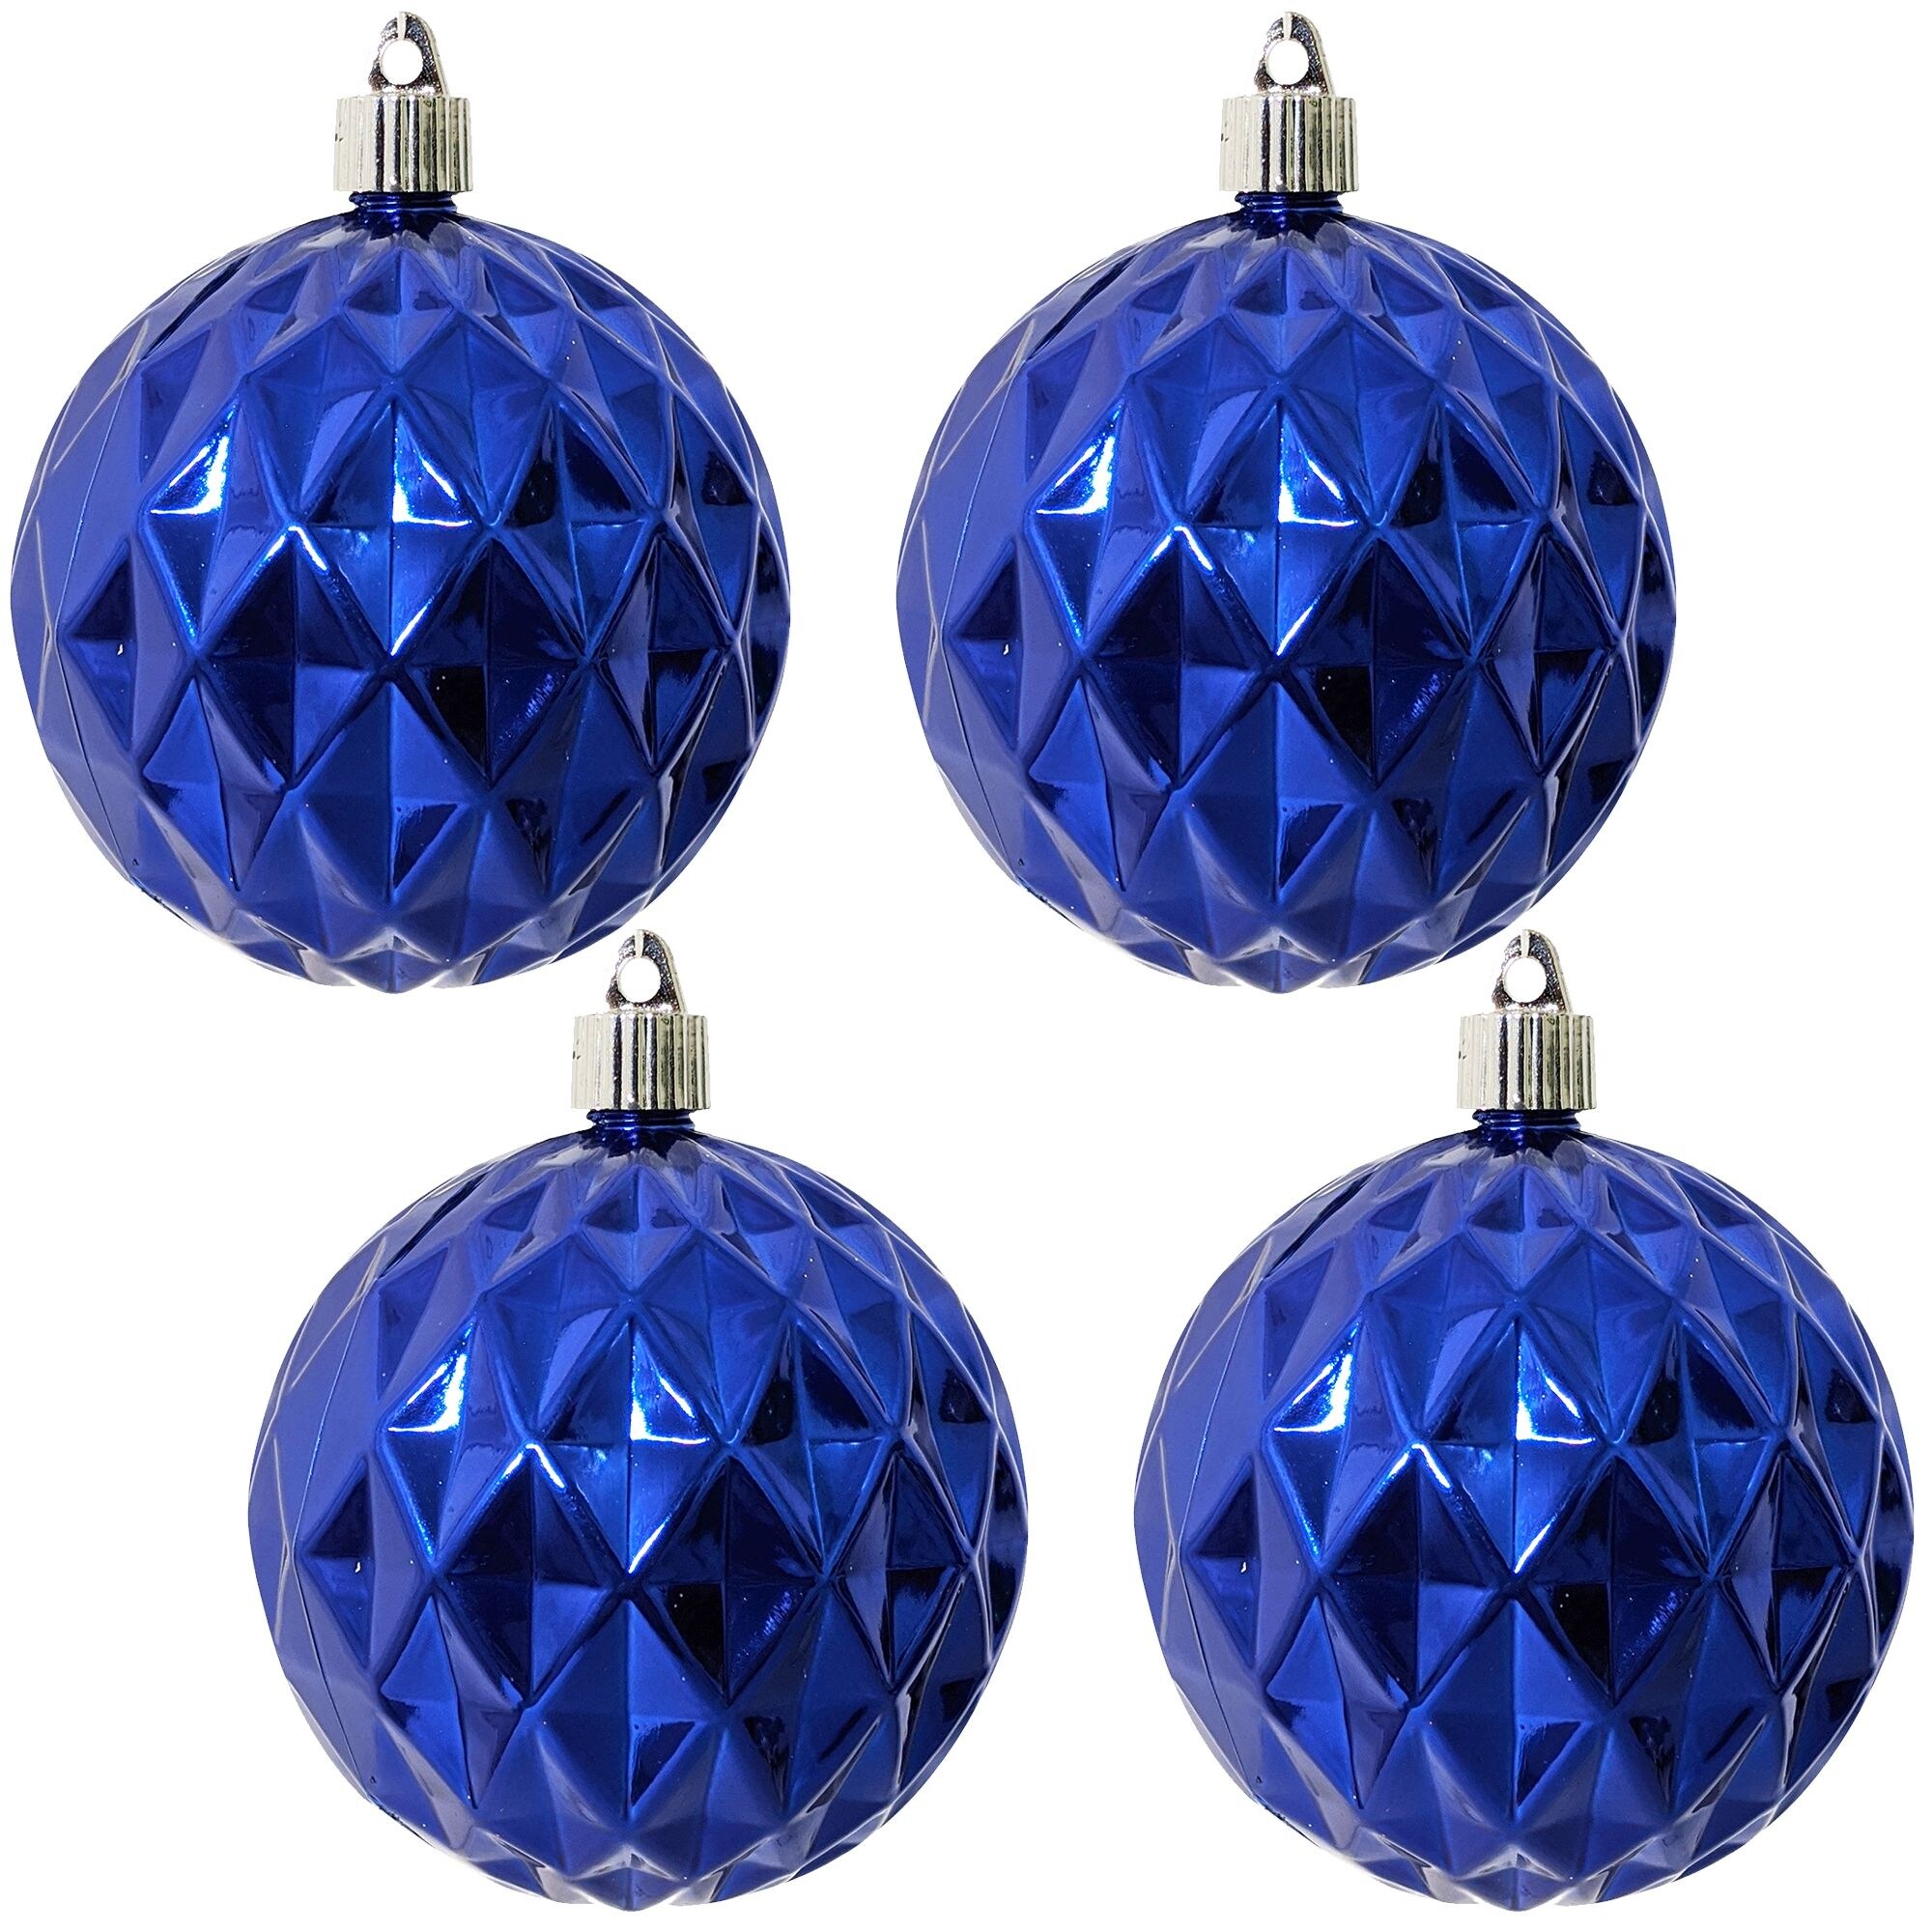 30-Piece Blue, Silver Shatterproof Christmas Ornaments Set - Gift Ornaments  - Hallmark